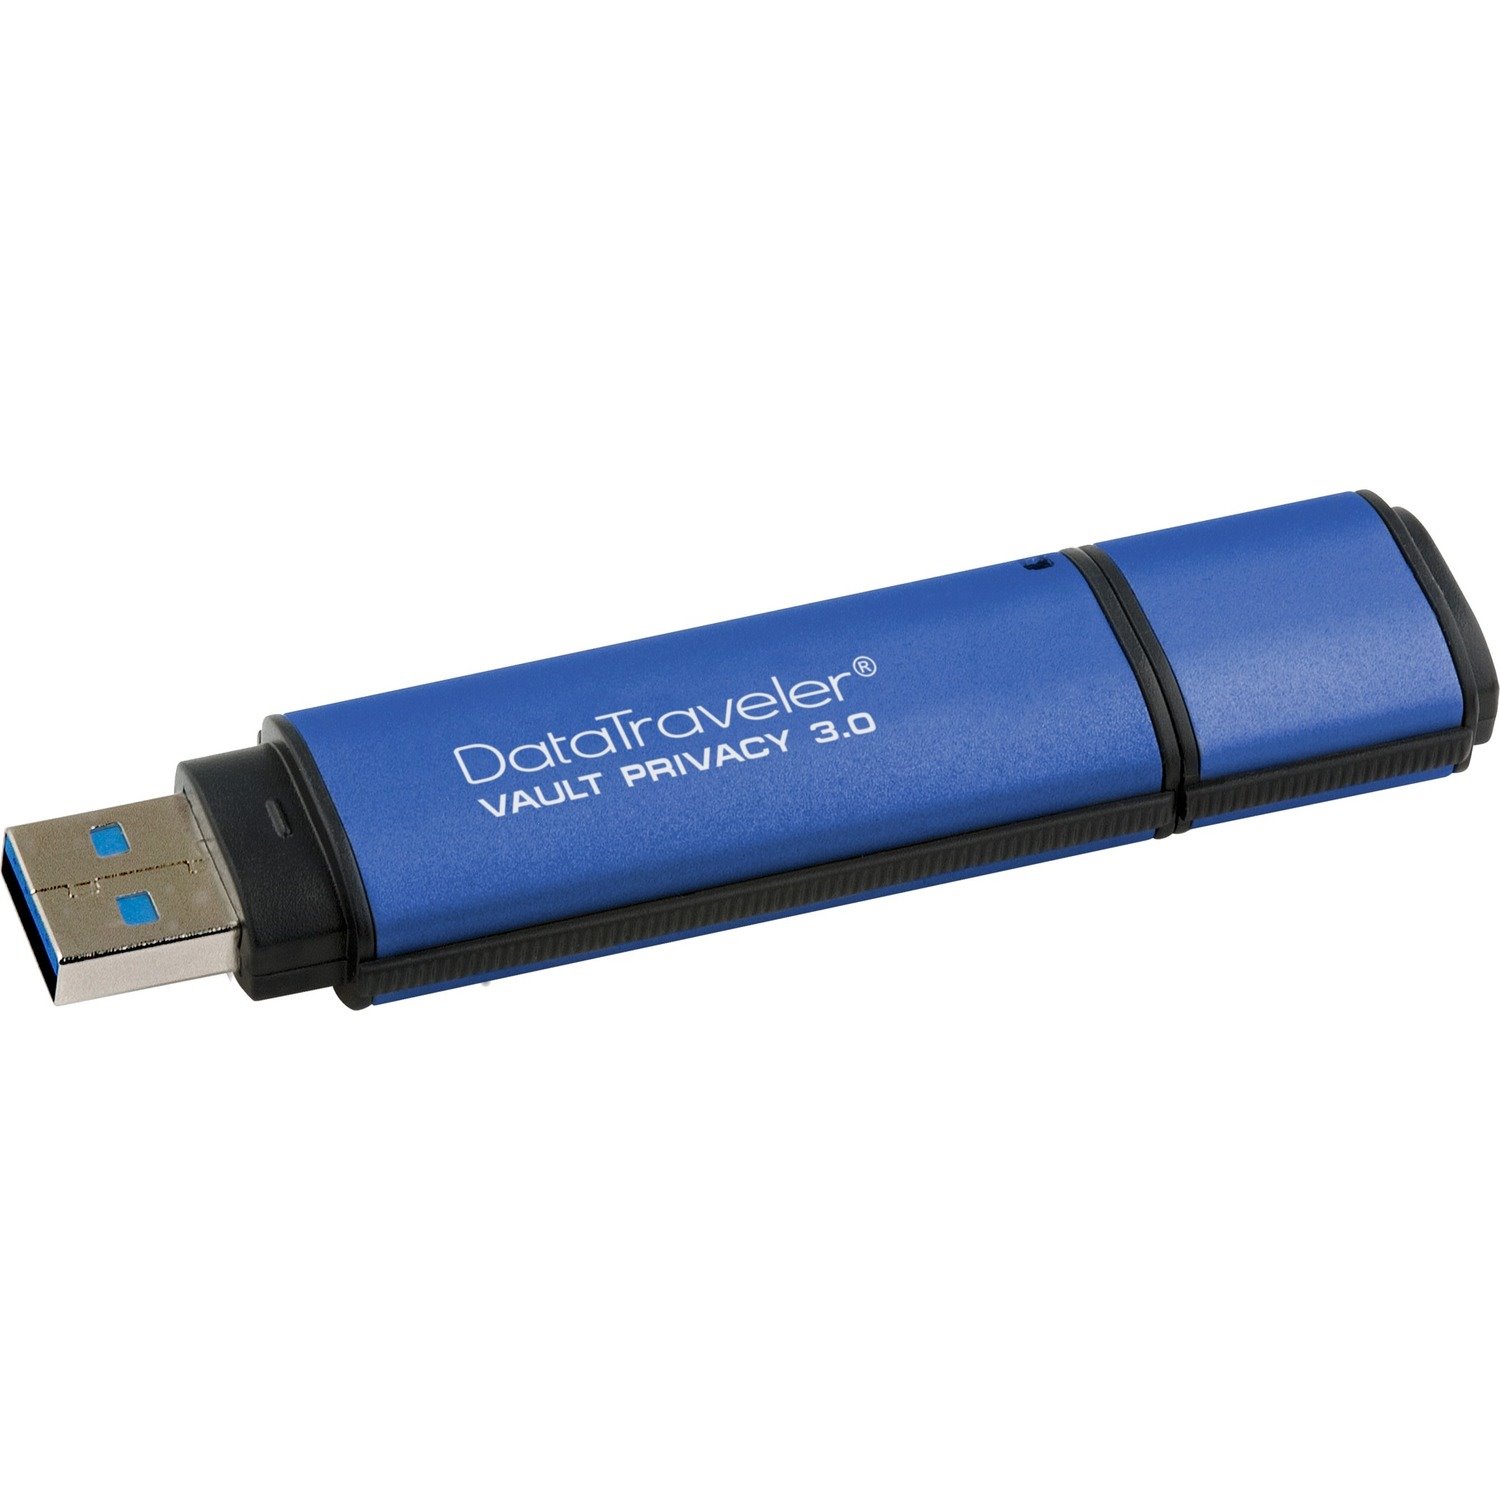 Kingston DataTraveler Vault Privacy 3.0 64 GB USB 3.0 Flash Drive - 256-bit AES